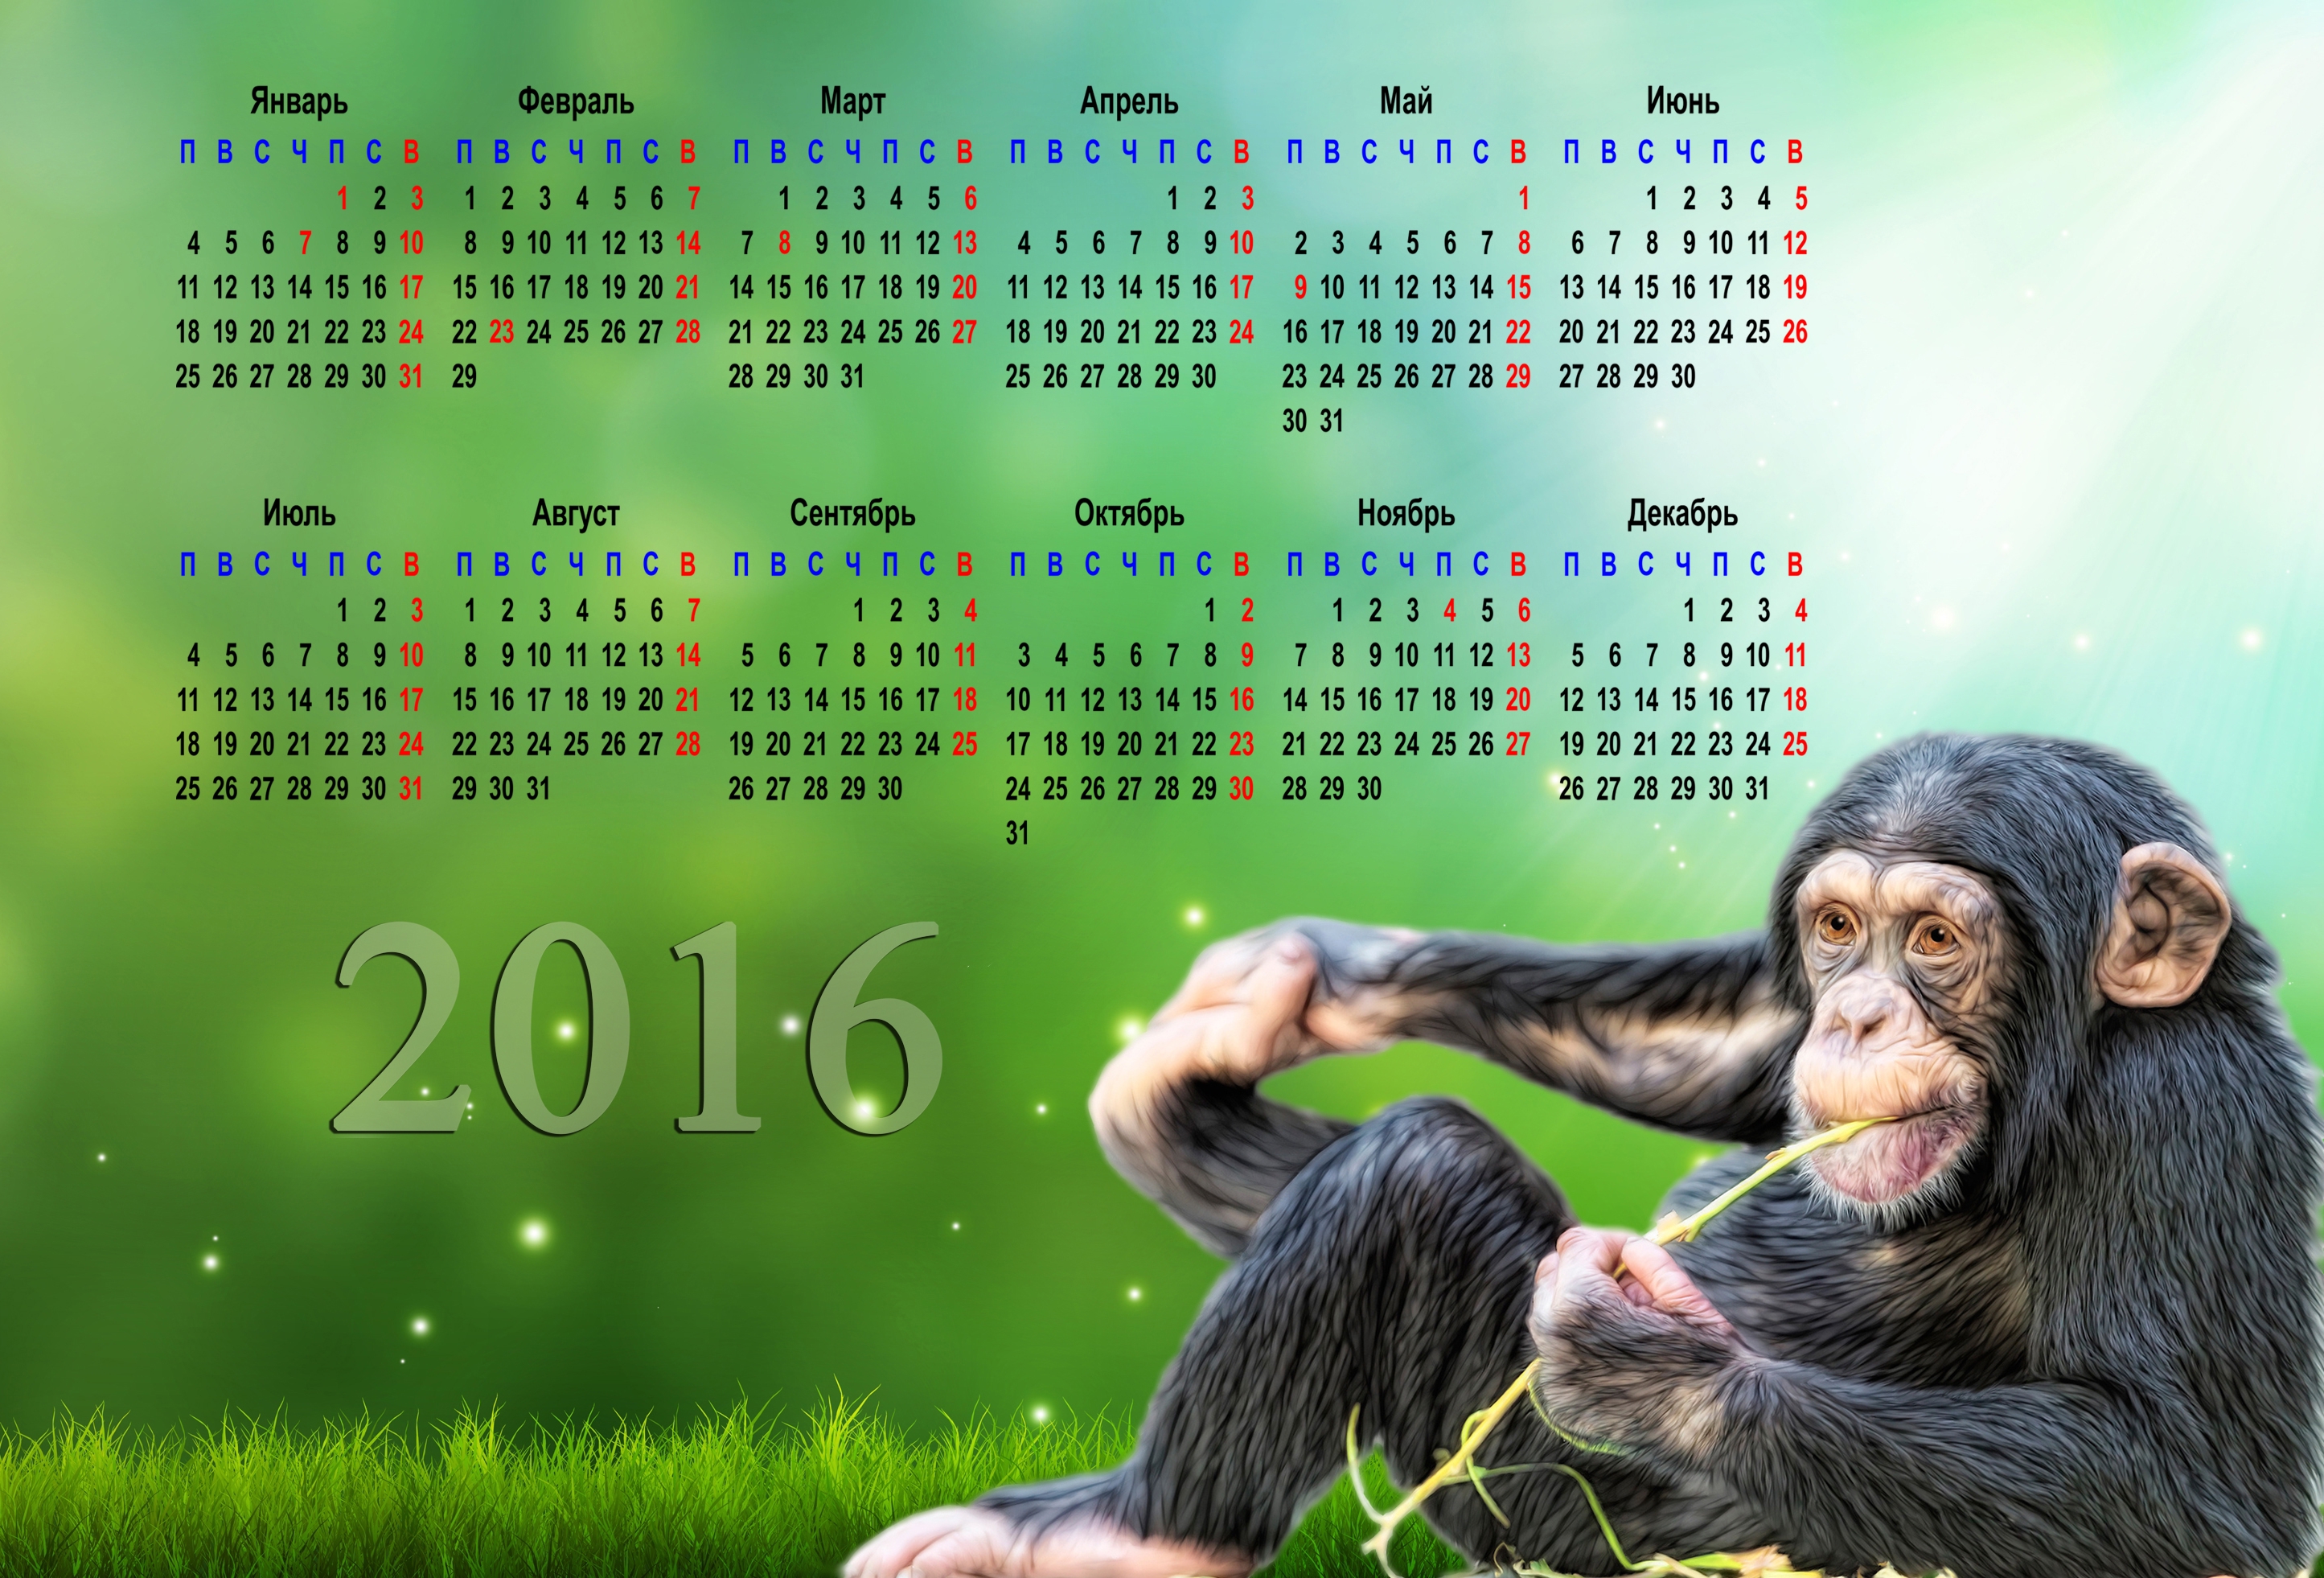 Информация о 2016 годе. Календарь 2016. Календарь 2016 год обезьяны. Календарь с обезьяной. Календарь с обезьянами 2016.